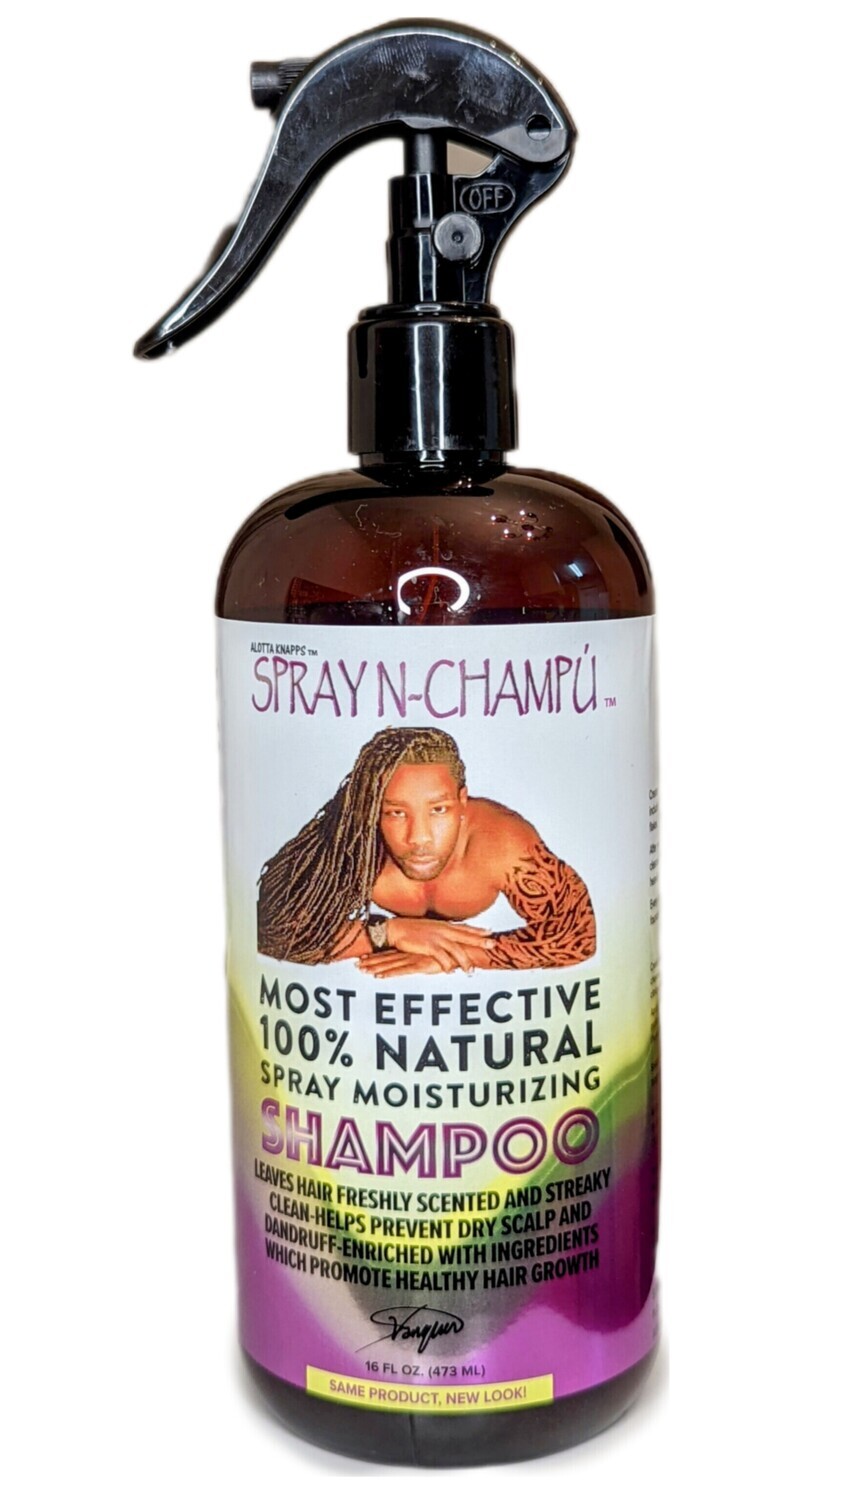 SPRAY N-CHAMPU *all natural moisturizing shampoo*